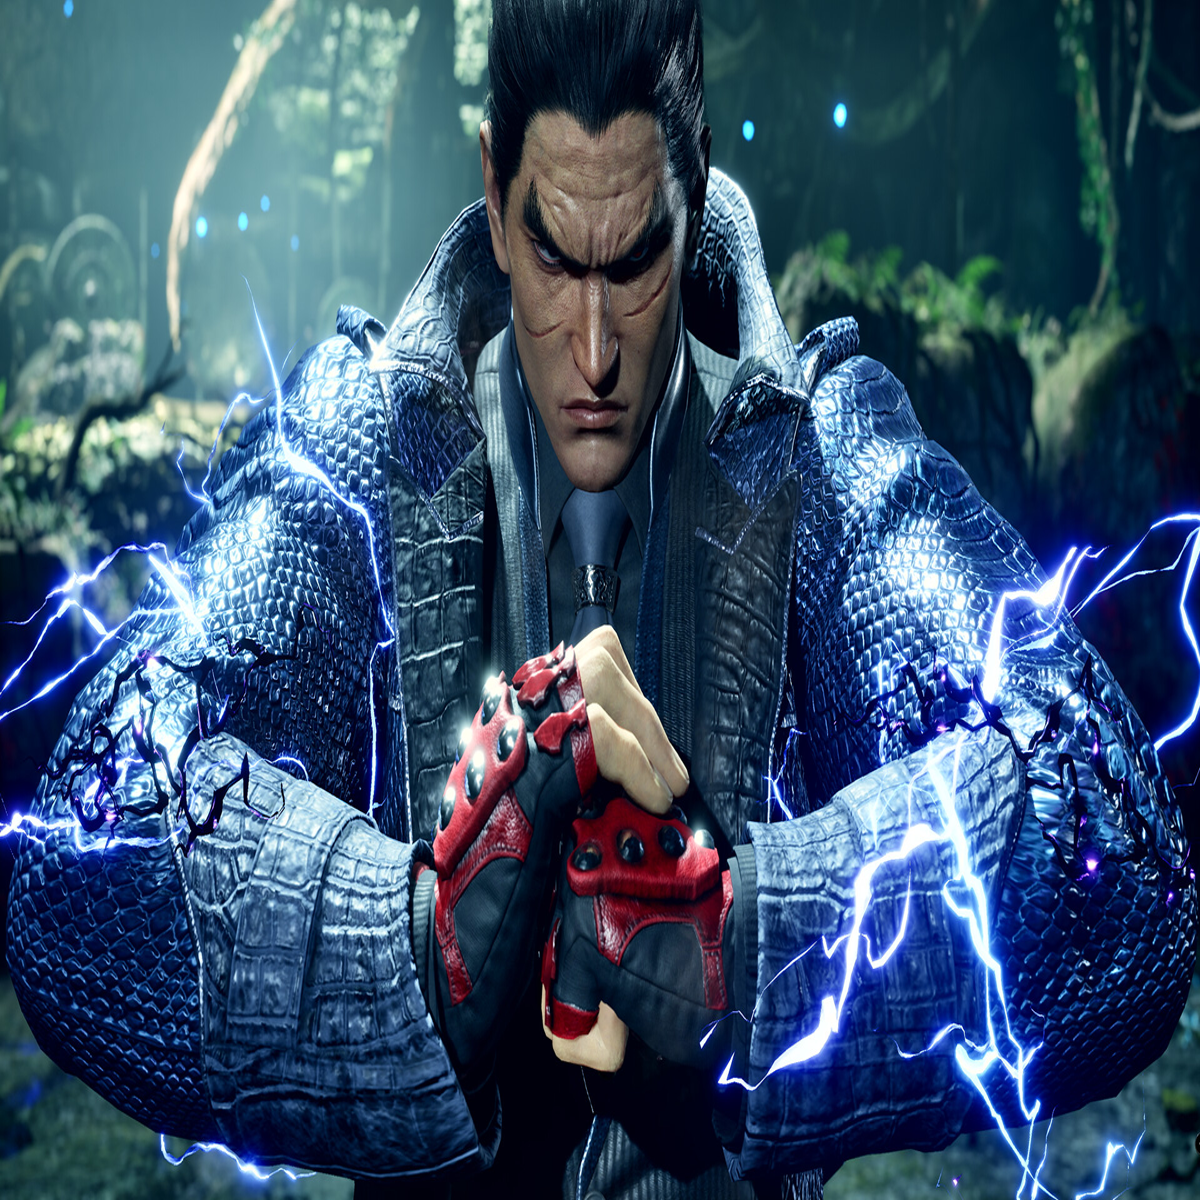 Tekken 8 closed beta access offered to Virgin Media O2 customers